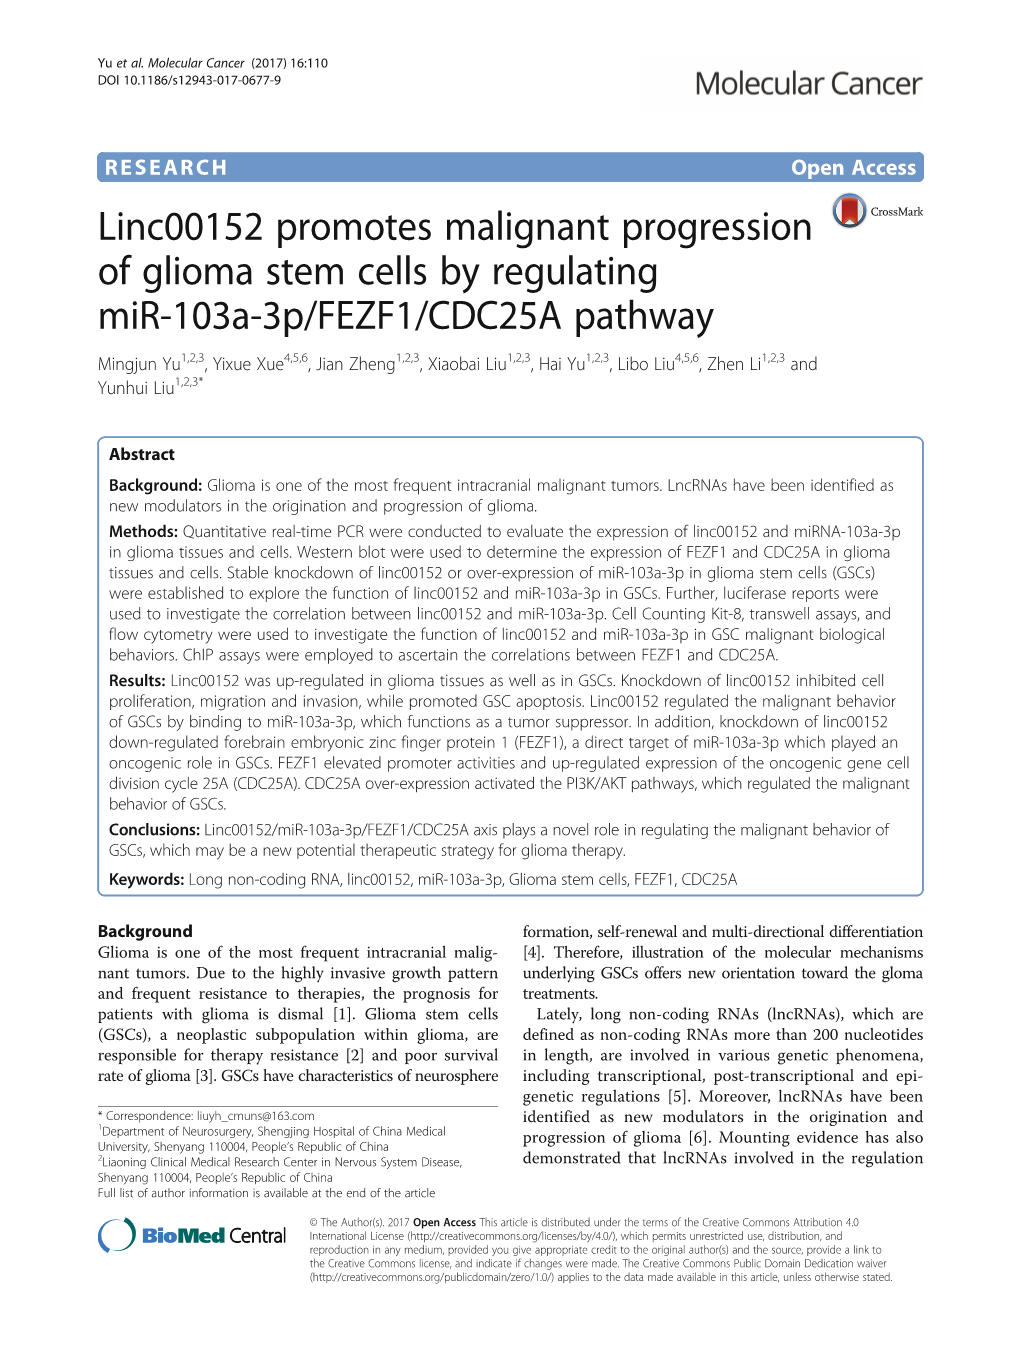 Linc00152 Promotes Malignant Progression of Glioma Stem Cells By